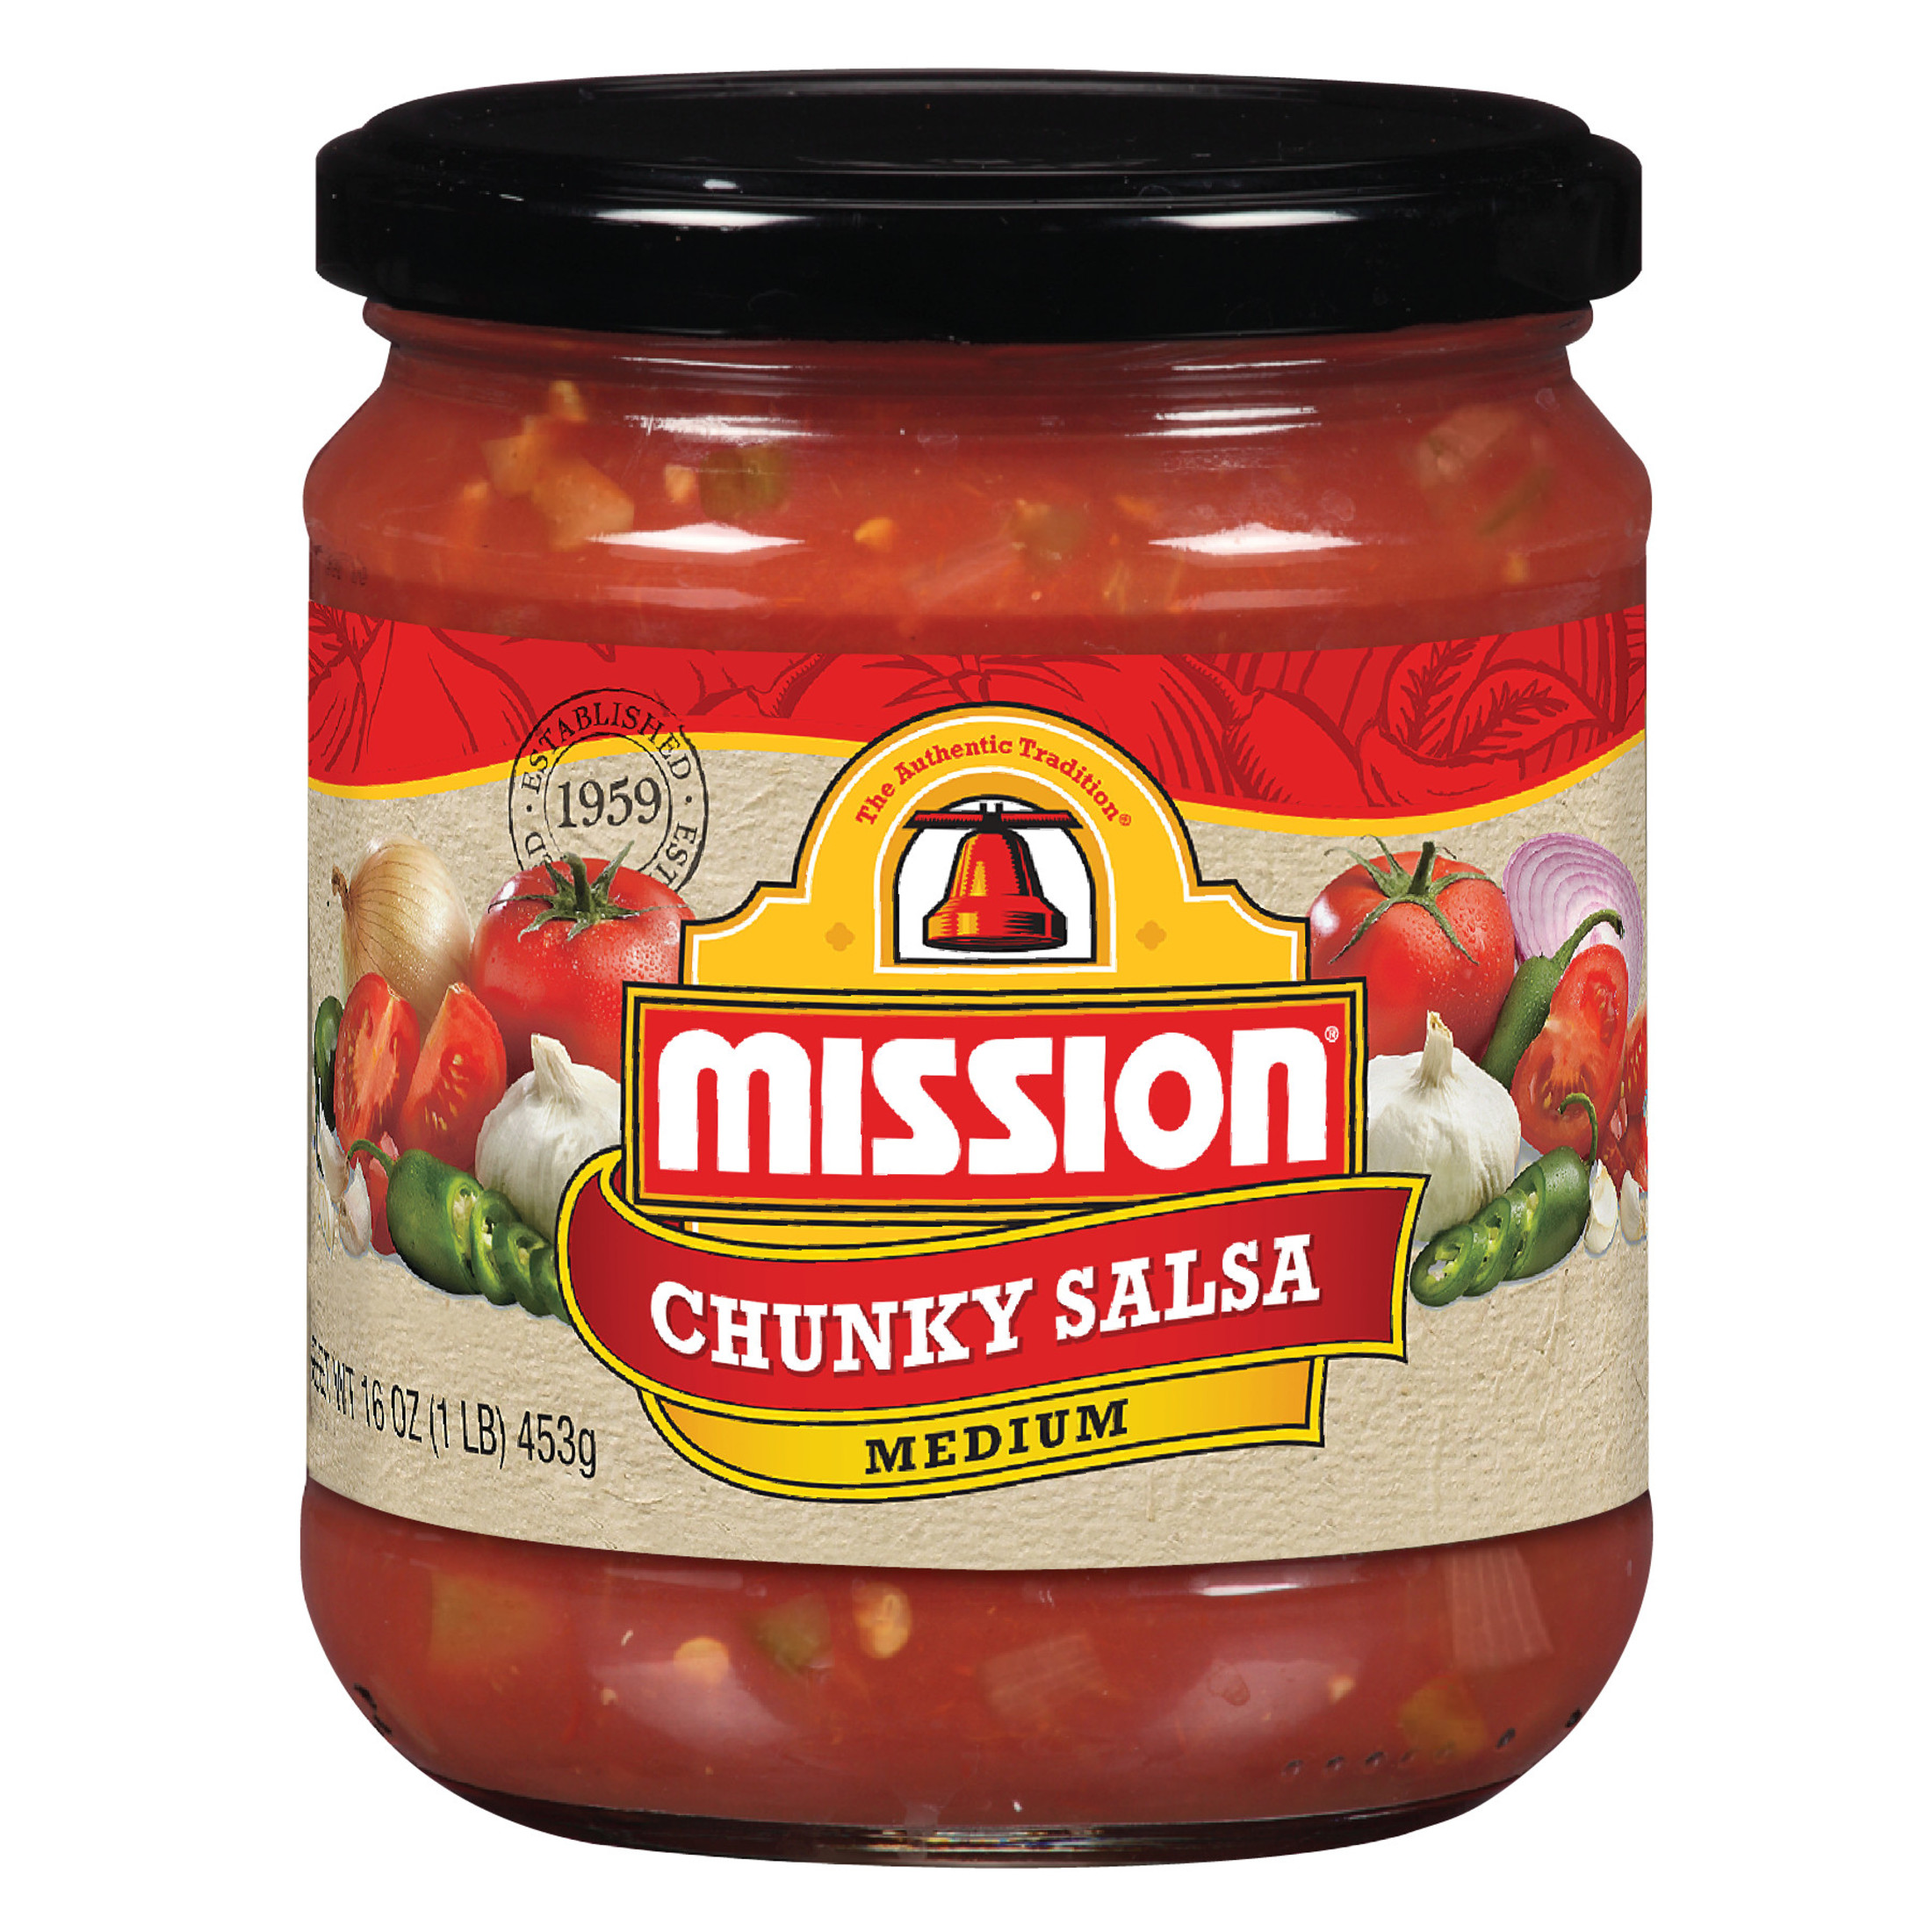 Mission Medium Chunky Salsa, 16 oz, 1 Count - image 1 of 5